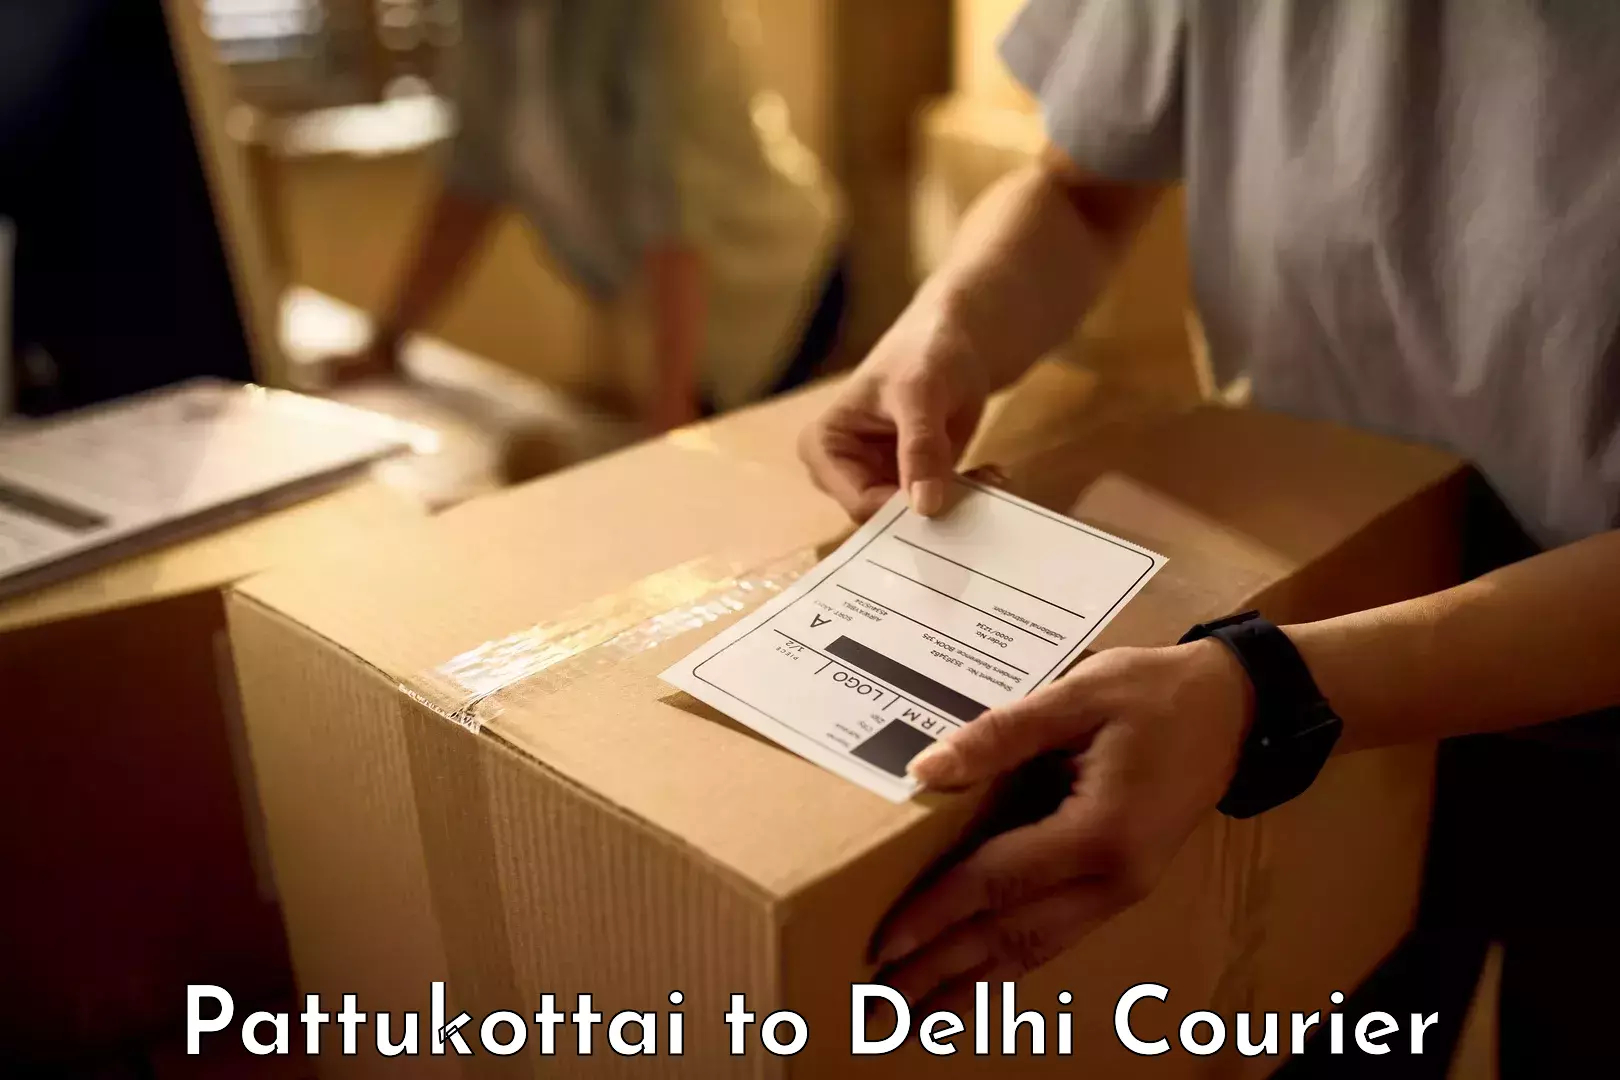 Luggage transport consultancy Pattukottai to NCR